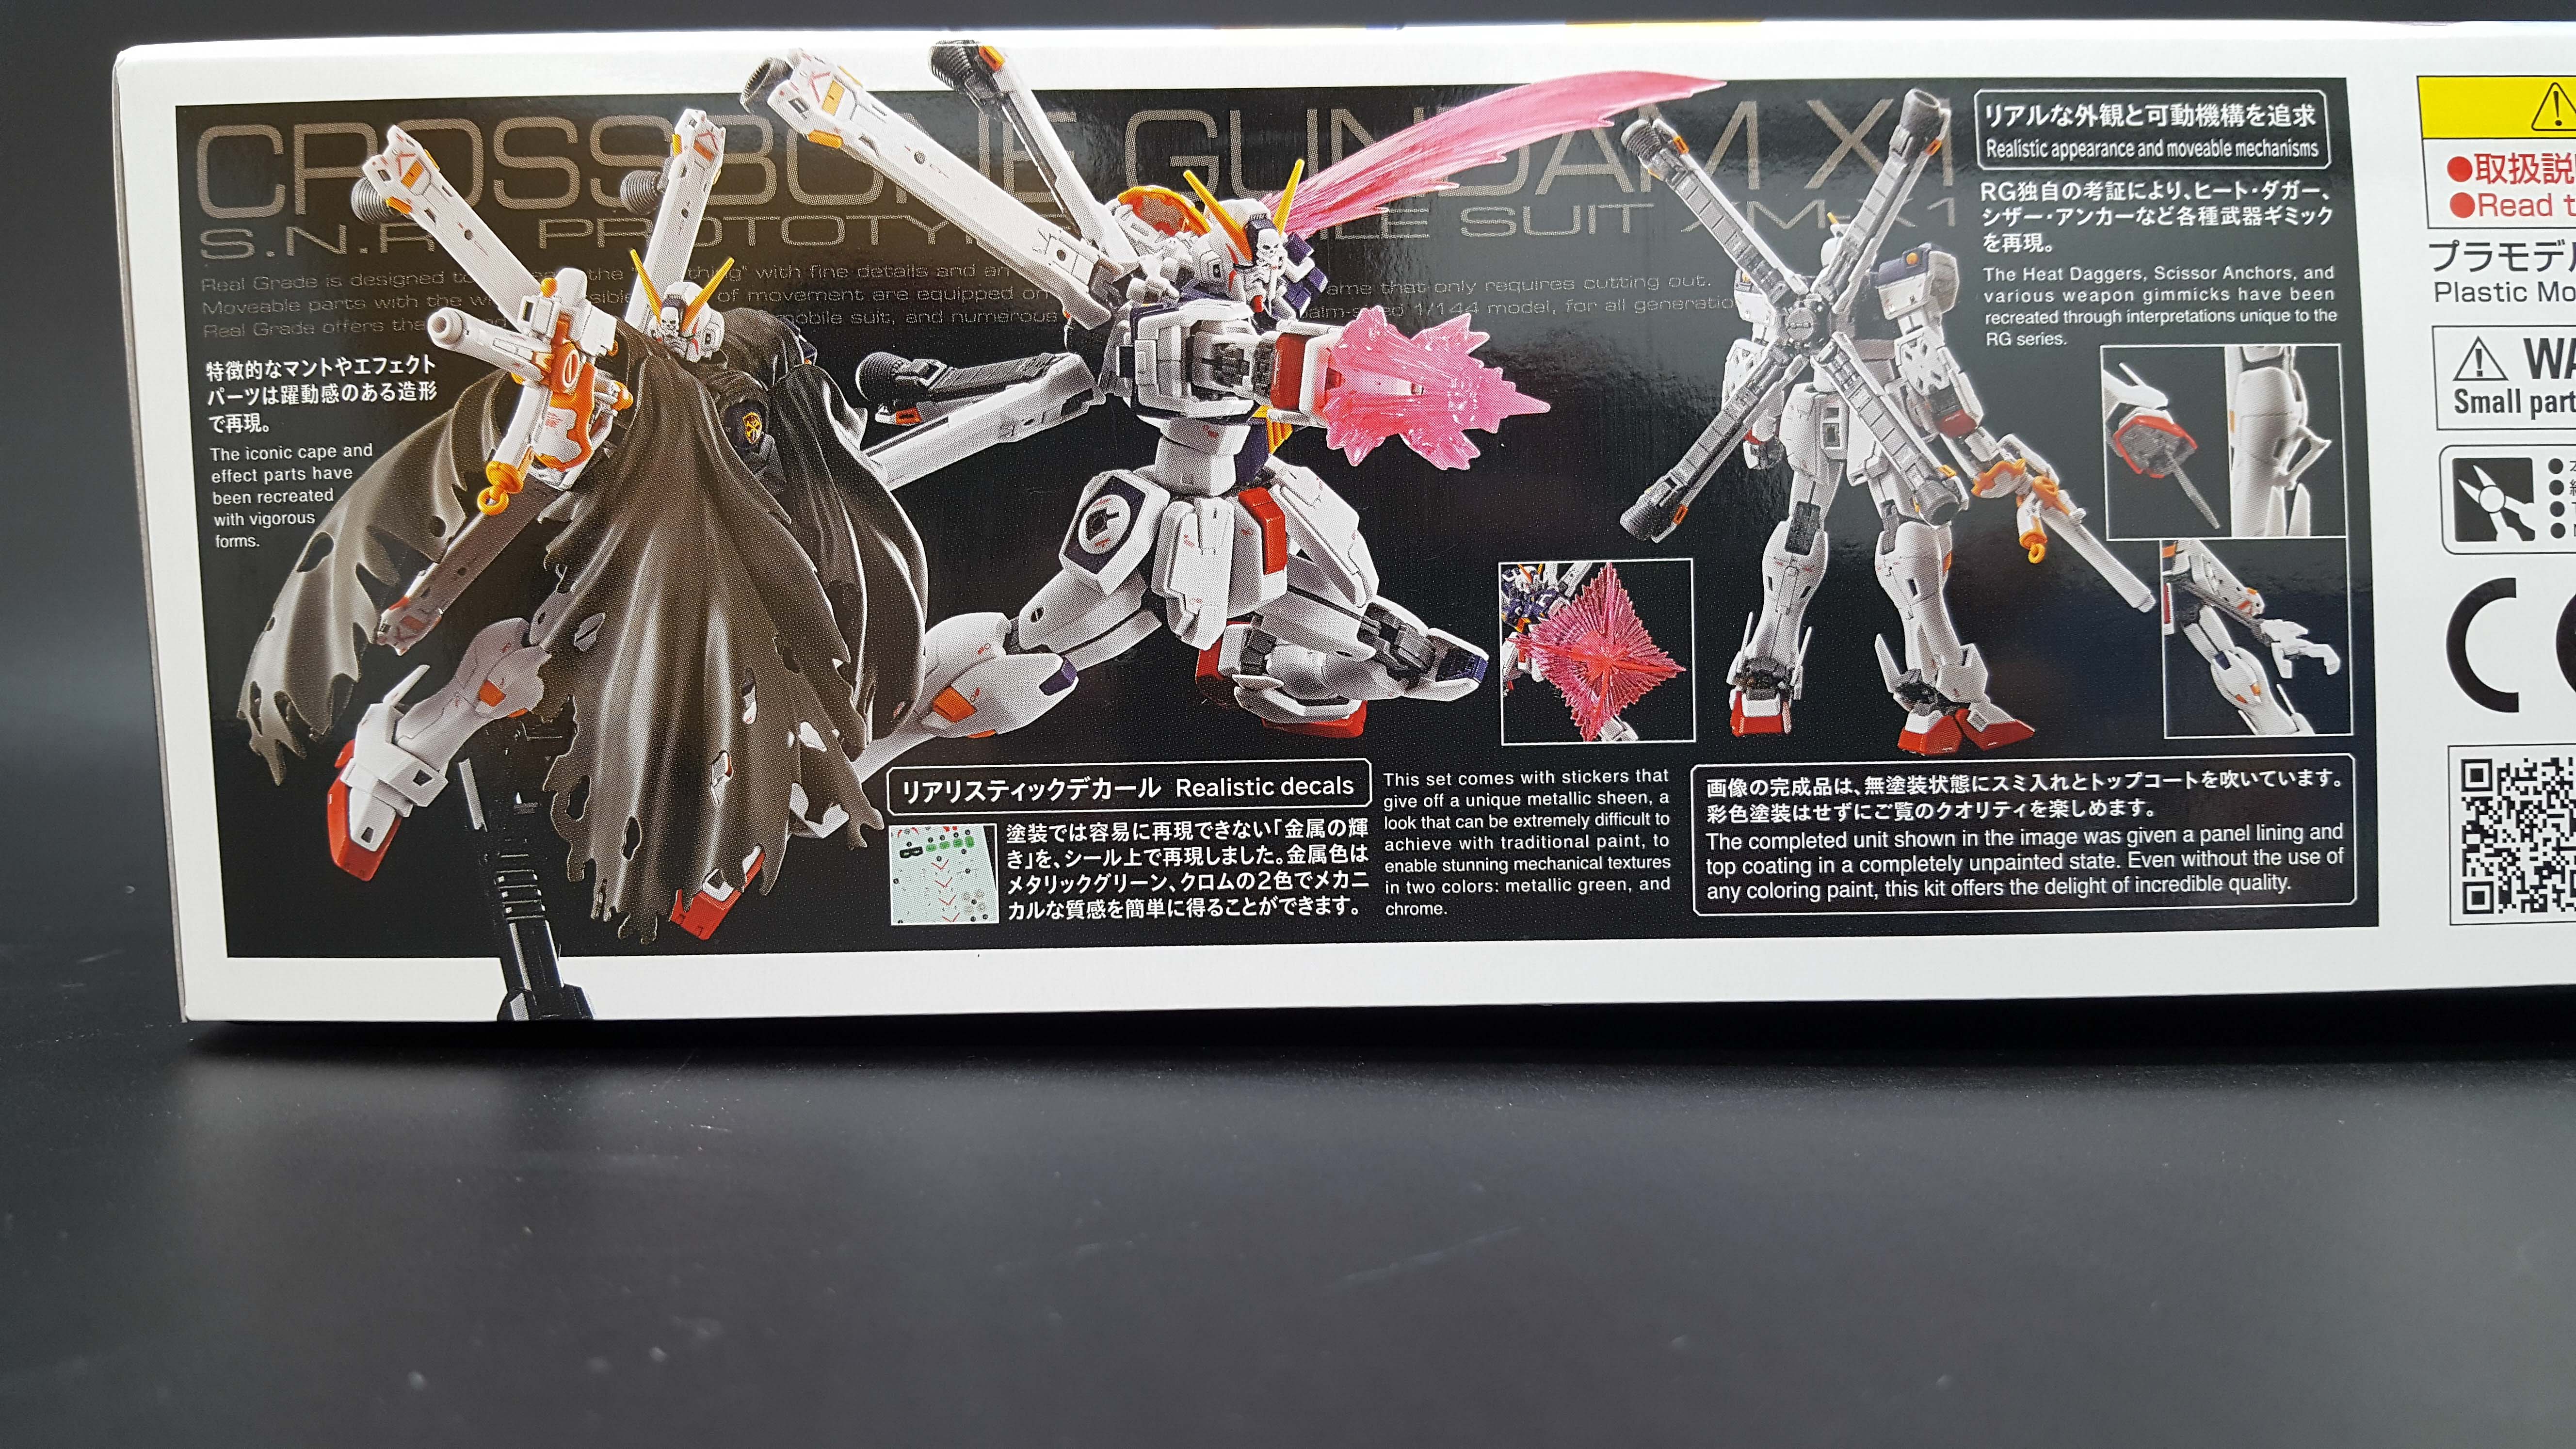 Details about   BANDAI RG 1/144 Crossbone Gundam X1 Gunpla Plastic Model Kit Clear Color